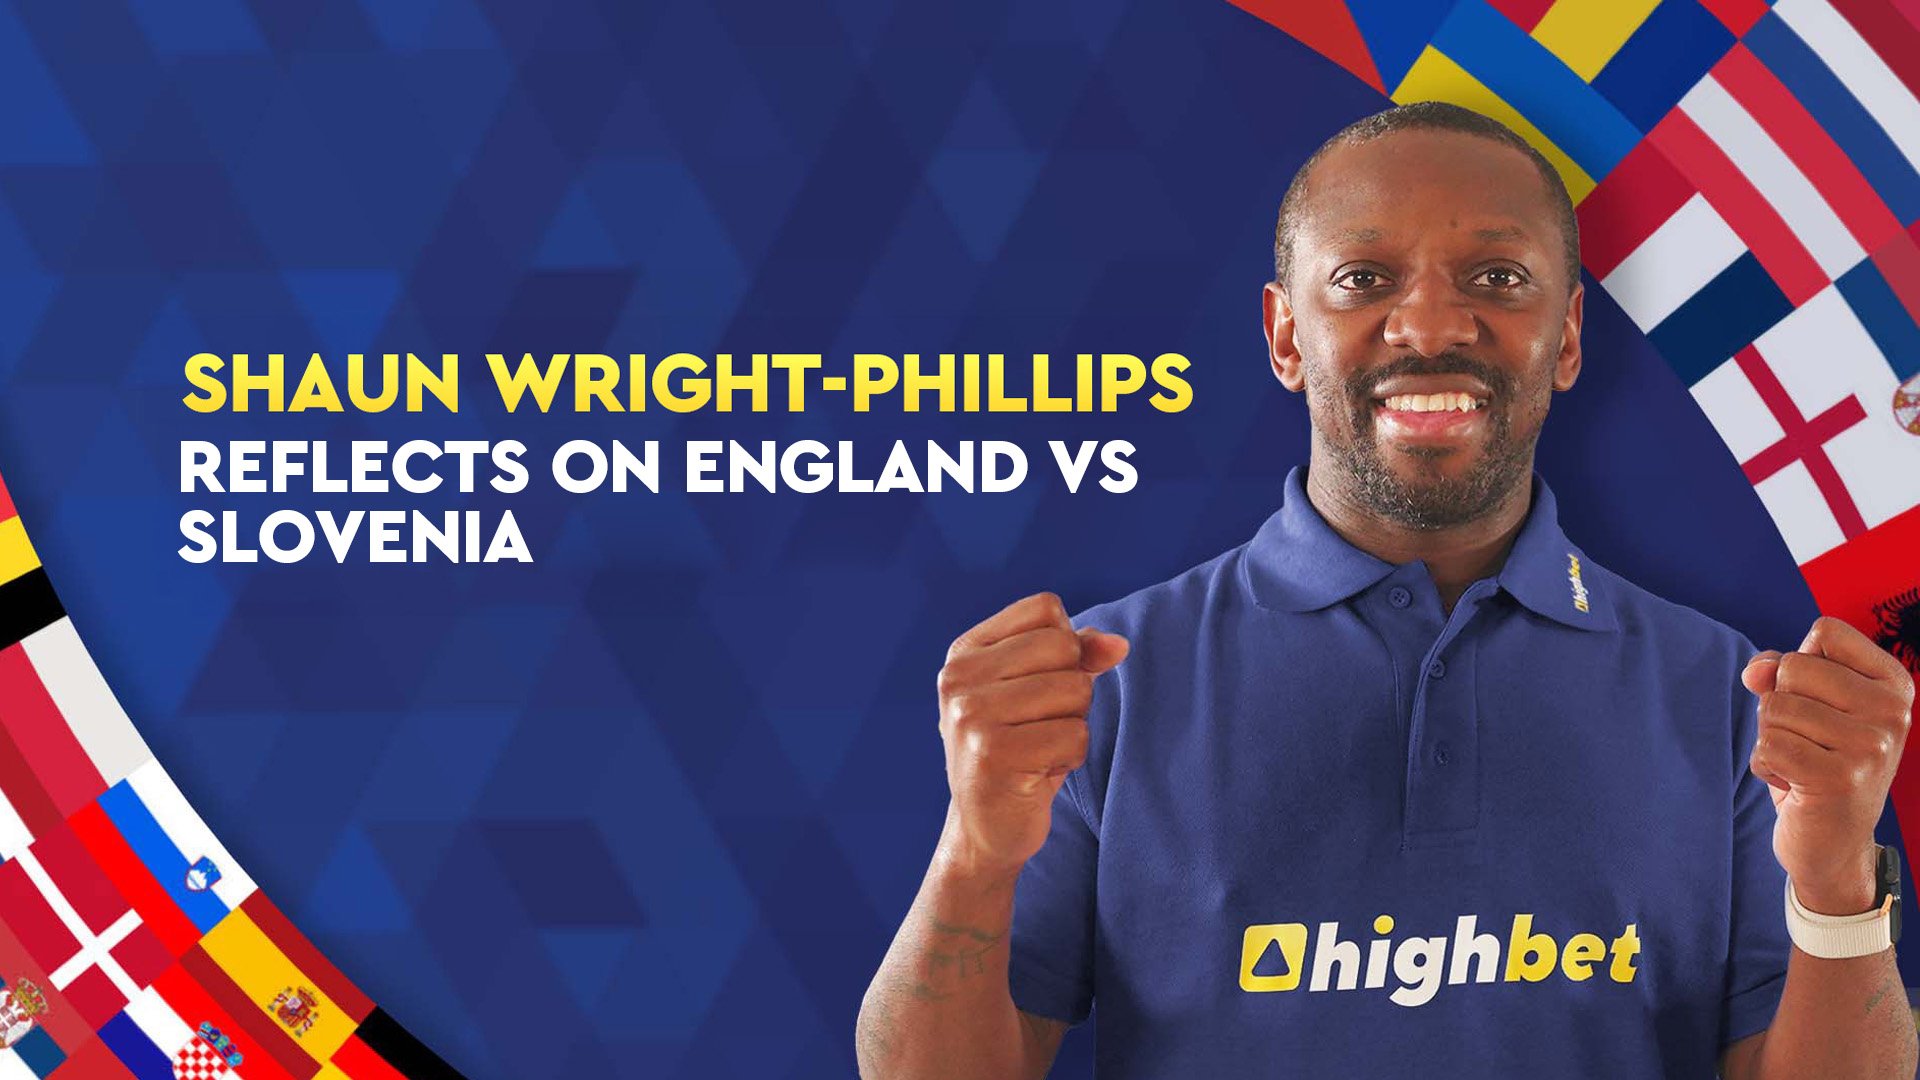 Video: Shaun Wright-Phillips reflects on England vs Slovenia